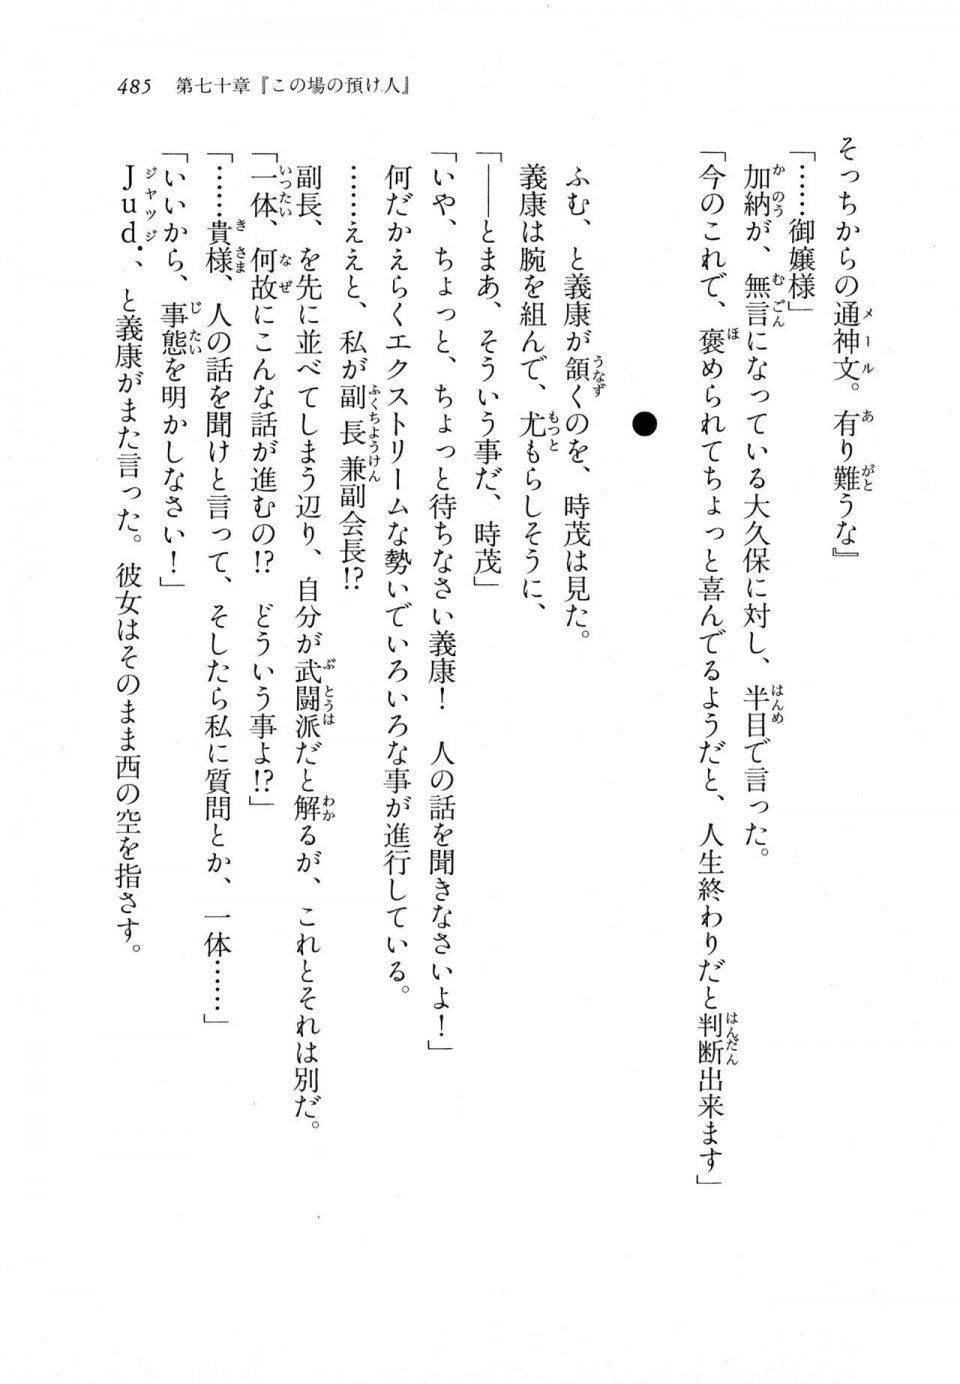 Kyoukai Senjou no Horizon LN Vol 18(7C) Part 1 - Photo #485